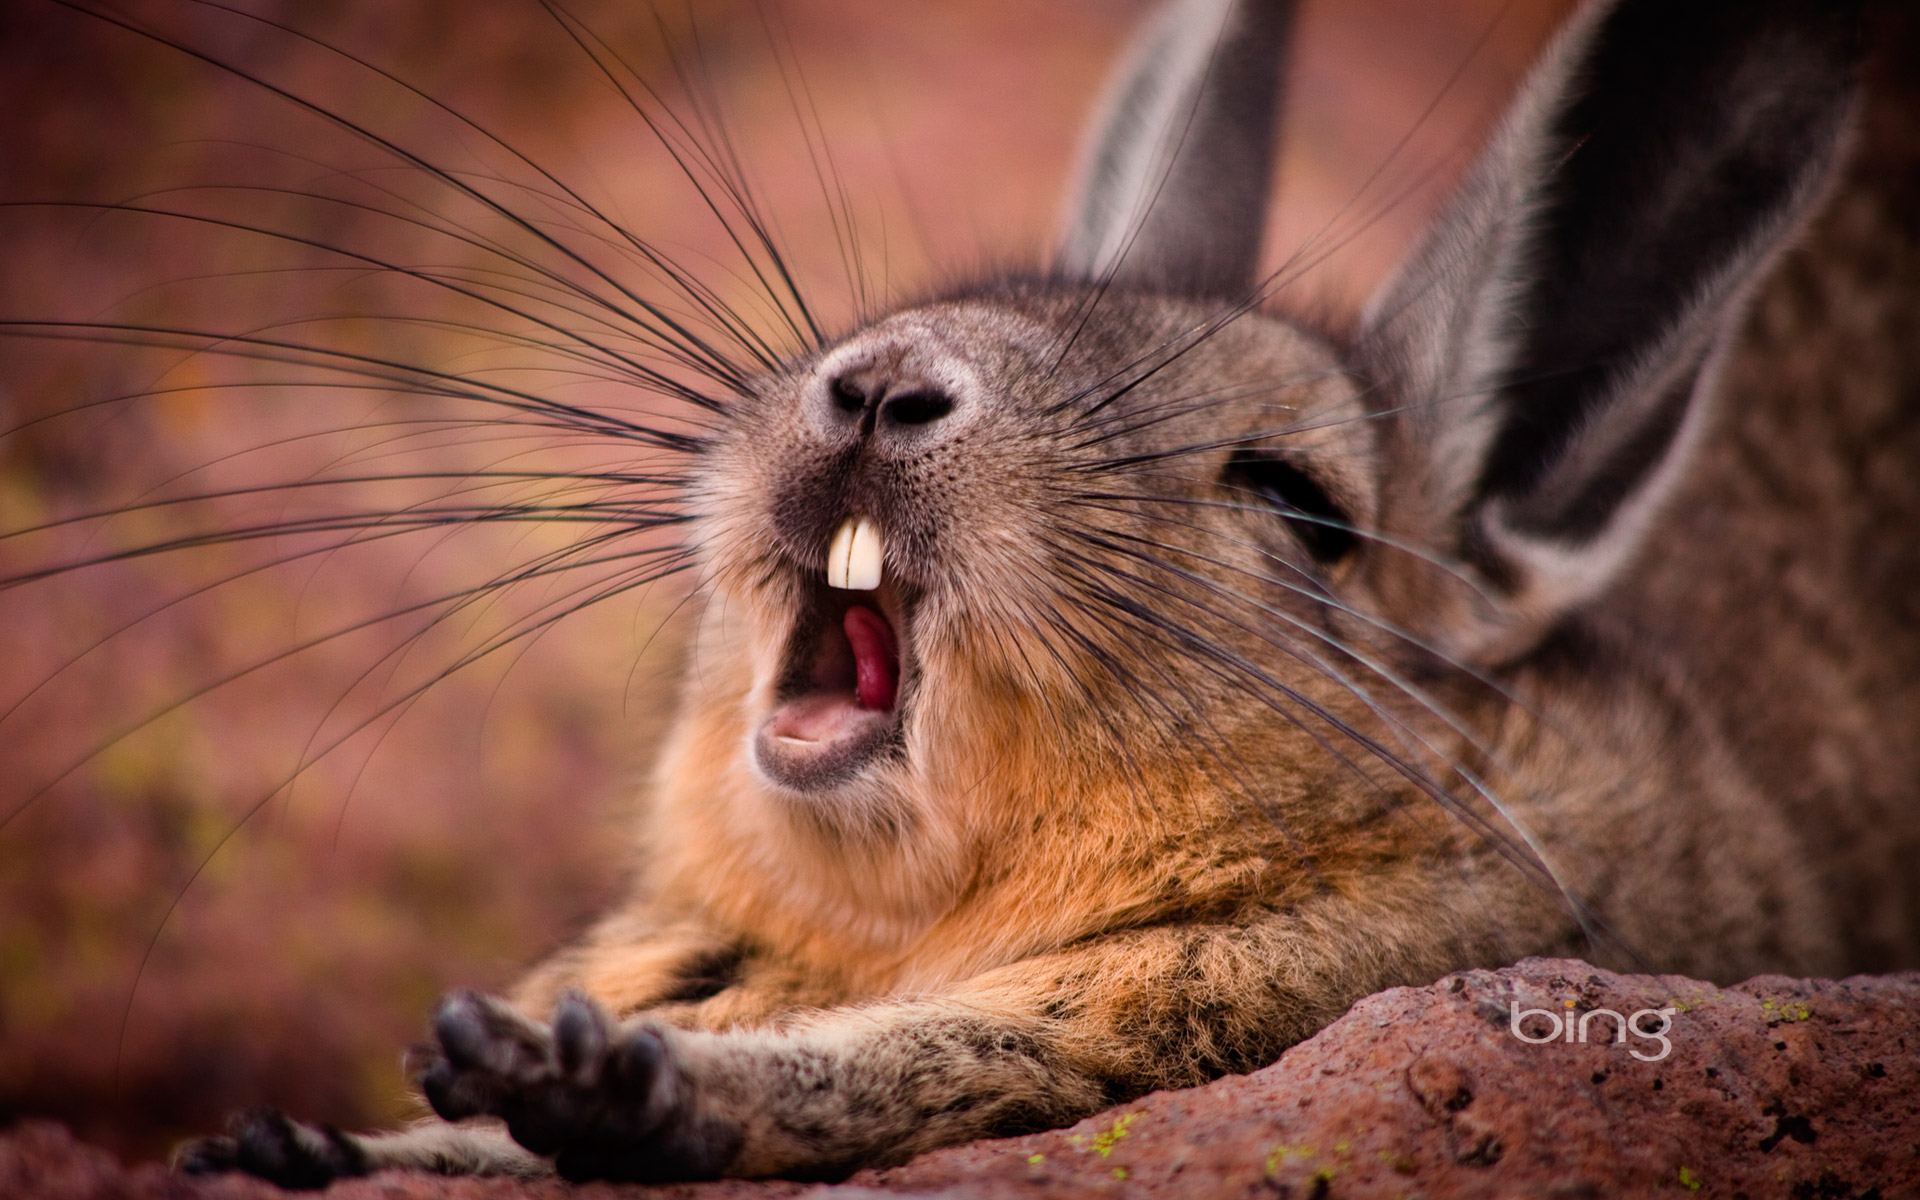 moutain viscacha yawning